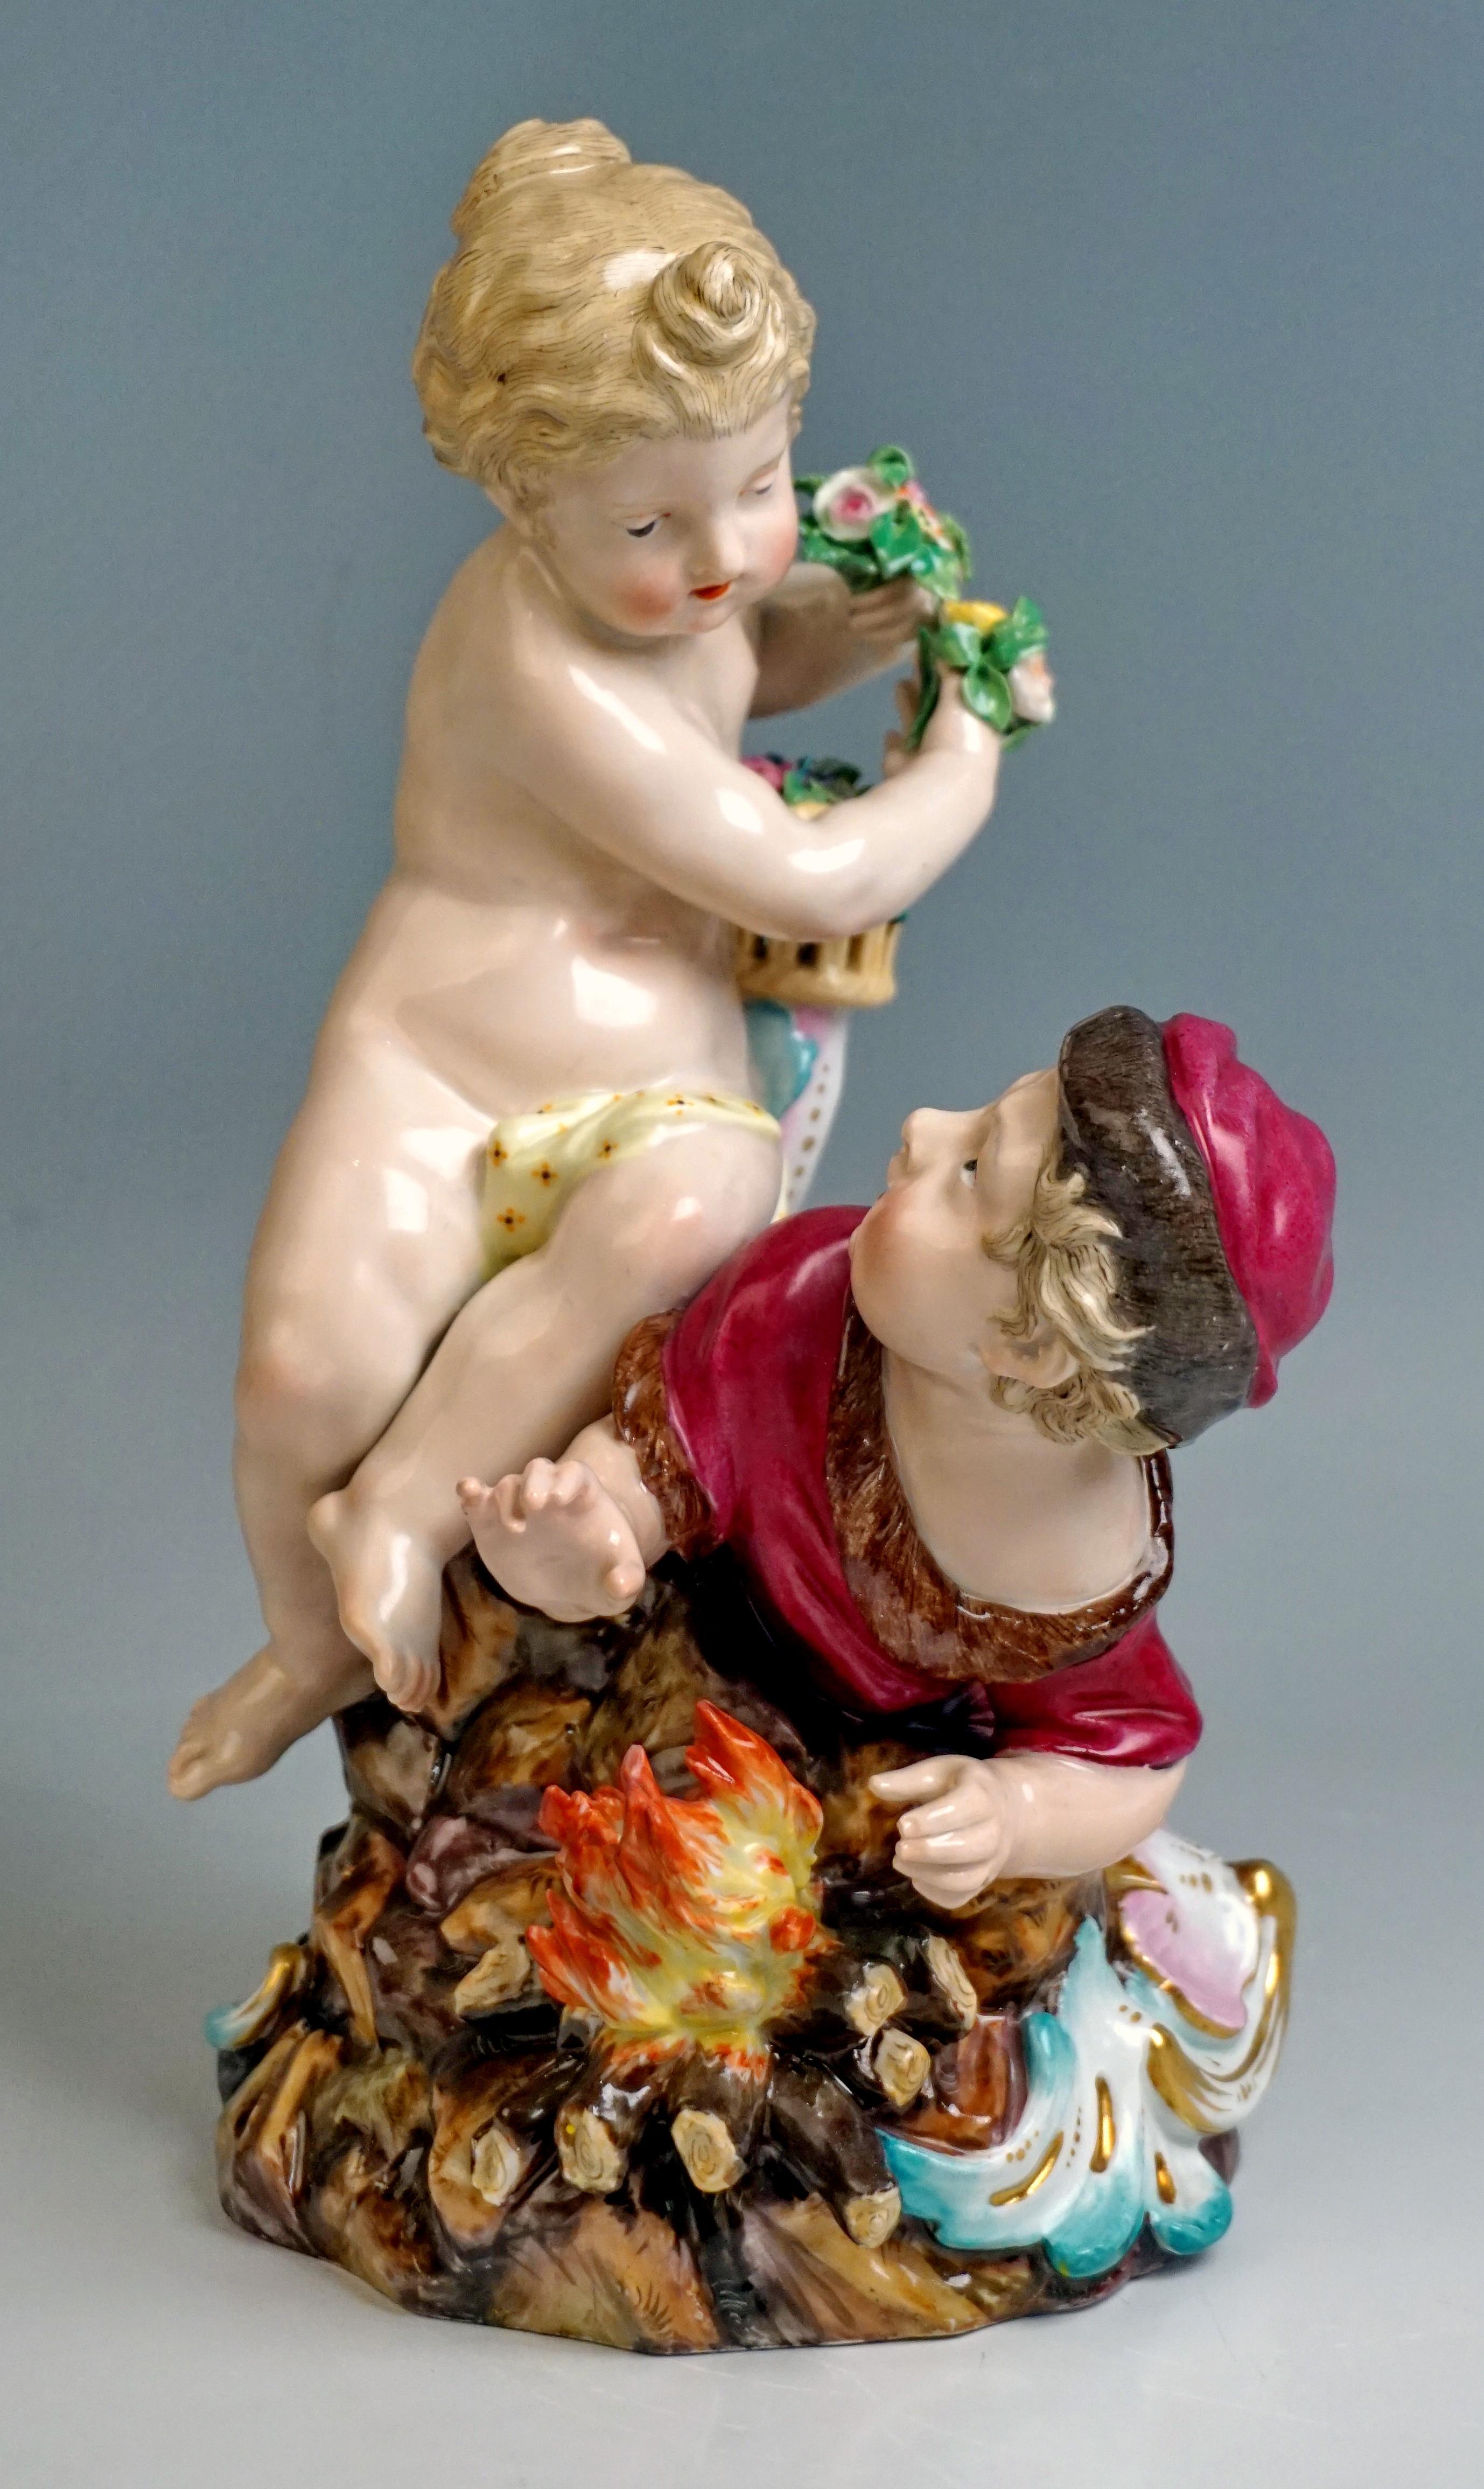 Pair of splendid figurine groups

Manufactory: Meissen Germany
Dating: made circa 1850
Material: white porcelain, glossy finish
Technique: handmade porcelain, finest painting

Designer:
Johann Joachim Kändler (1706-1775) was chief sculptor